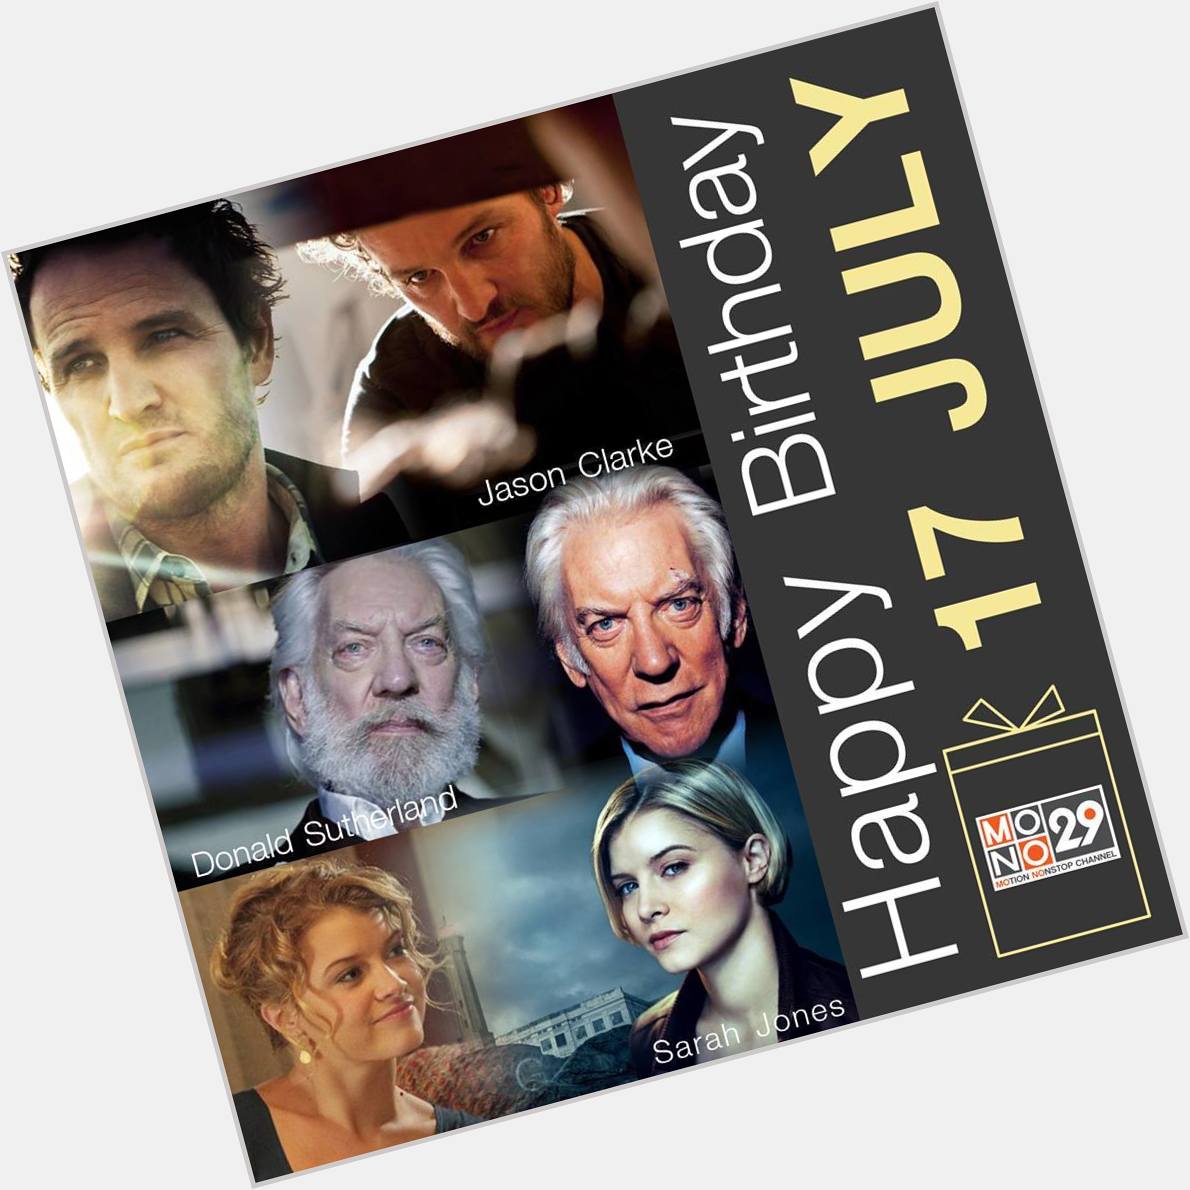 17 July Happy Birthday
- Jason Clarke 
- Sarah Jones
- Donald Sutherland 